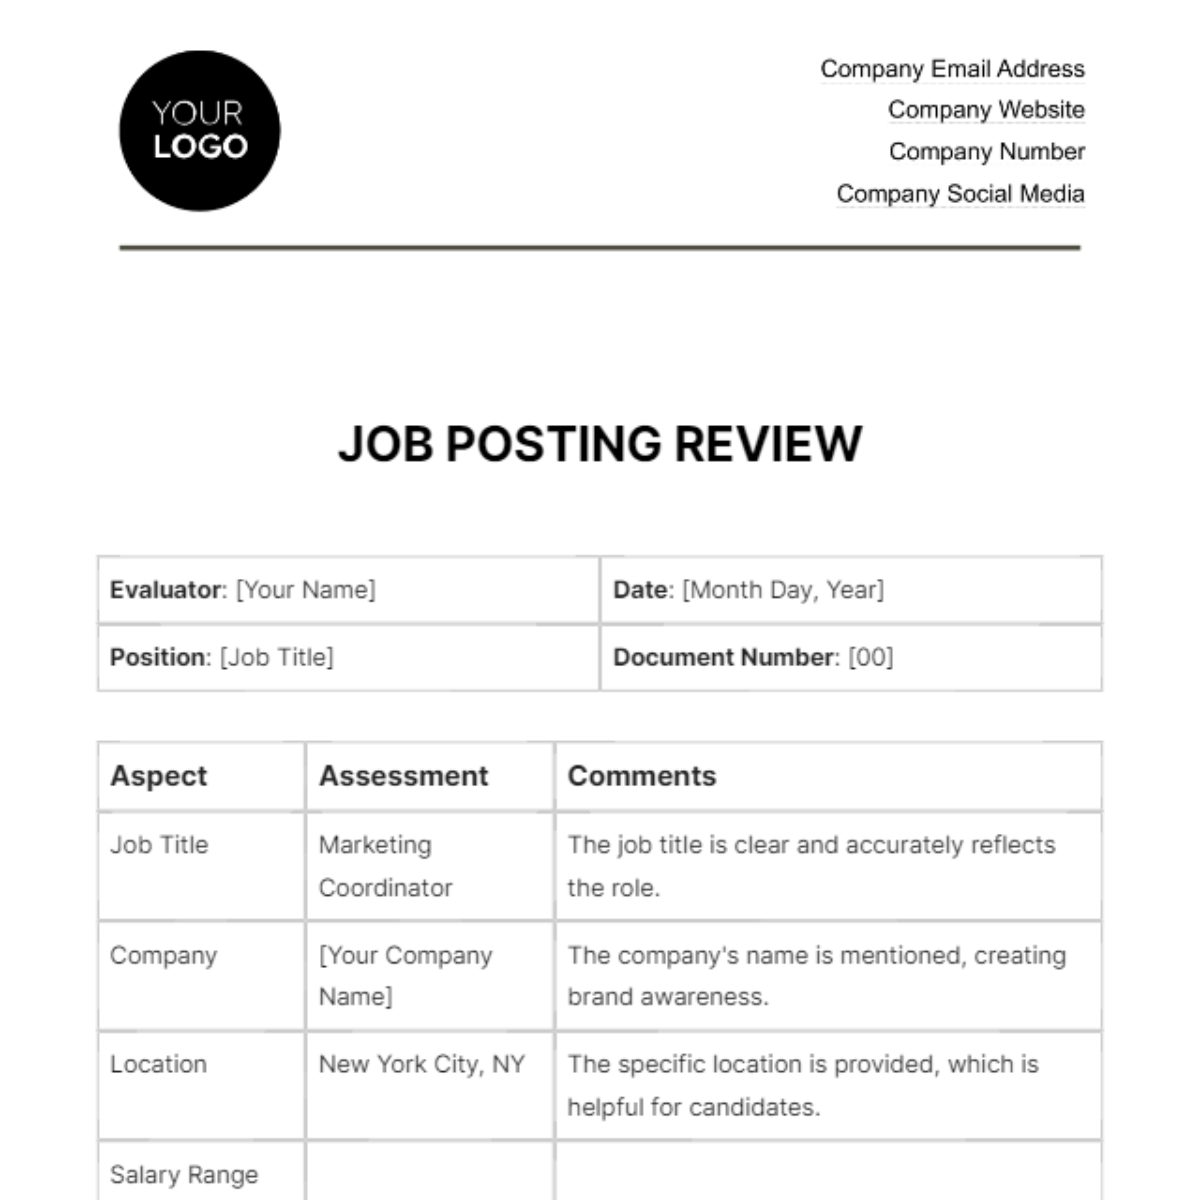 Job Posting Review HR Template